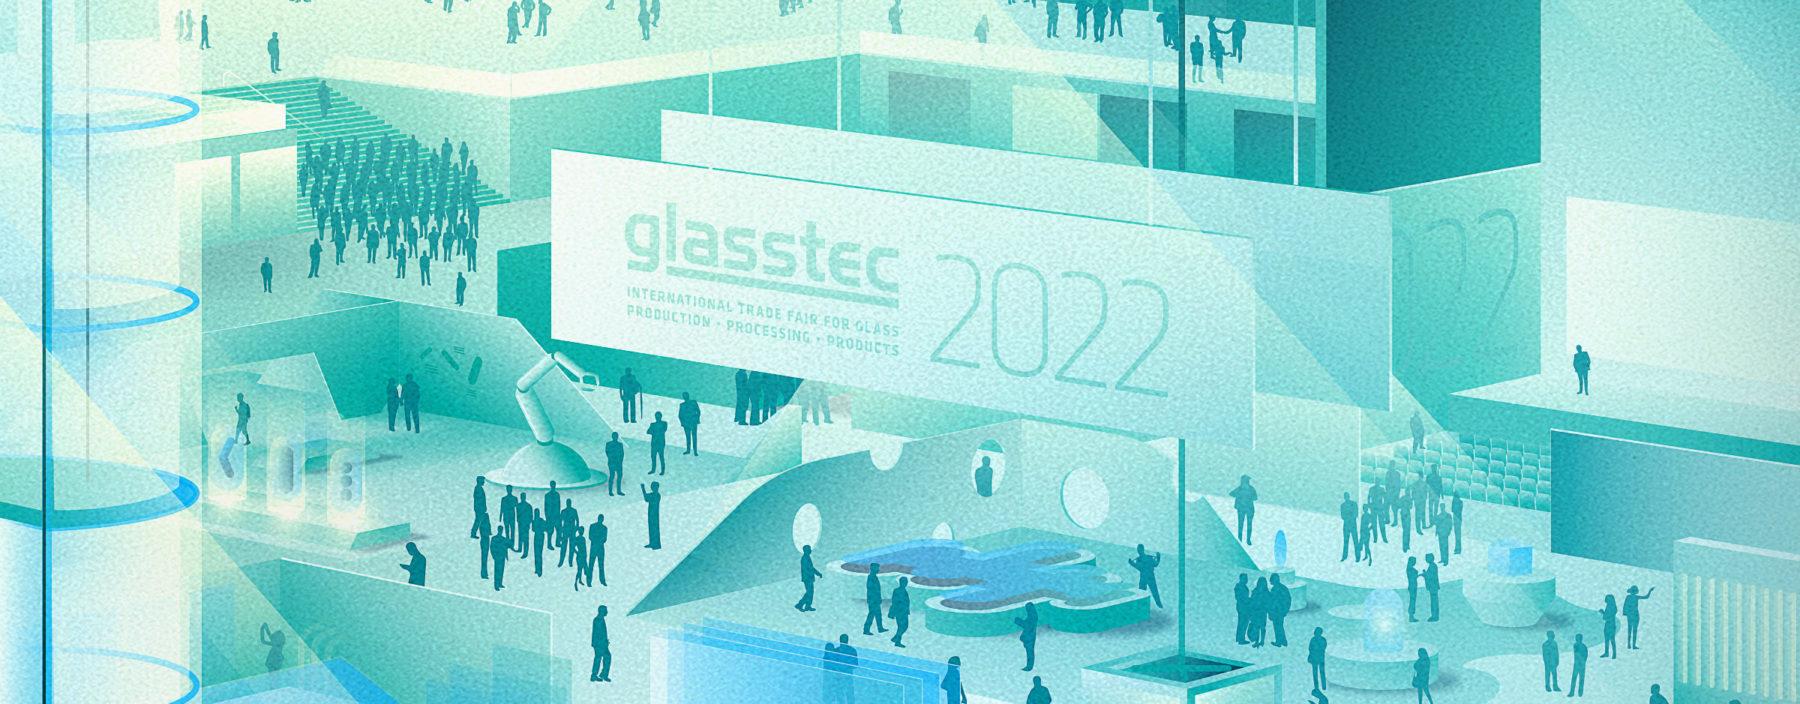 Italian Glass Moulds a Glasstech 2022